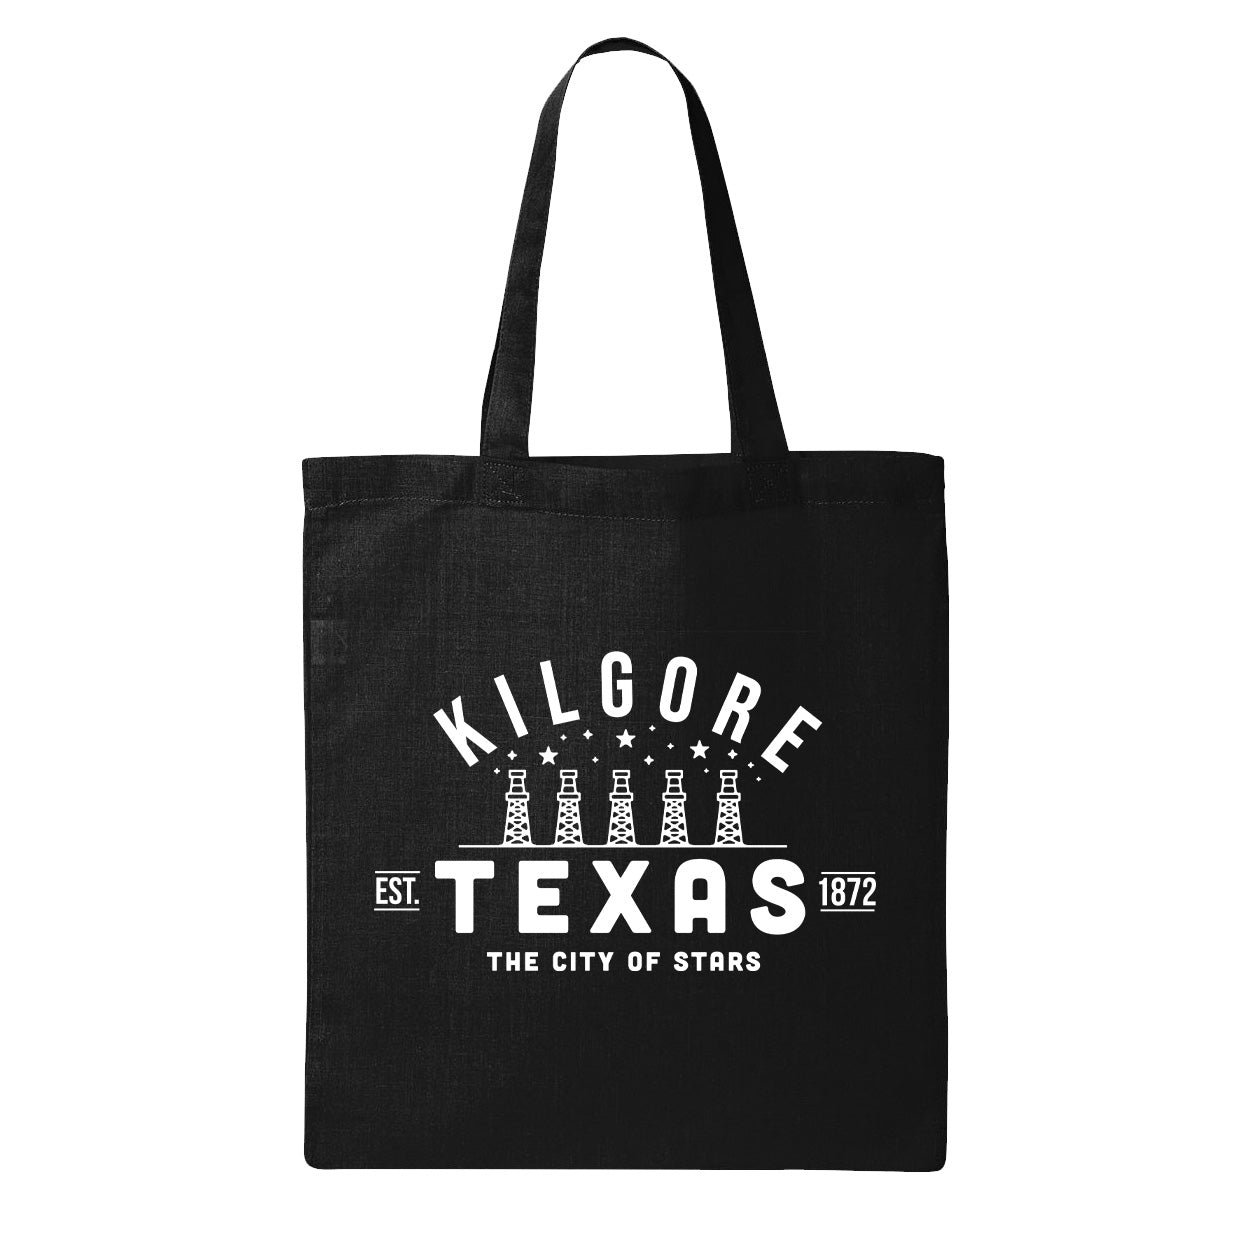 Kilgore Texas Tote Bag